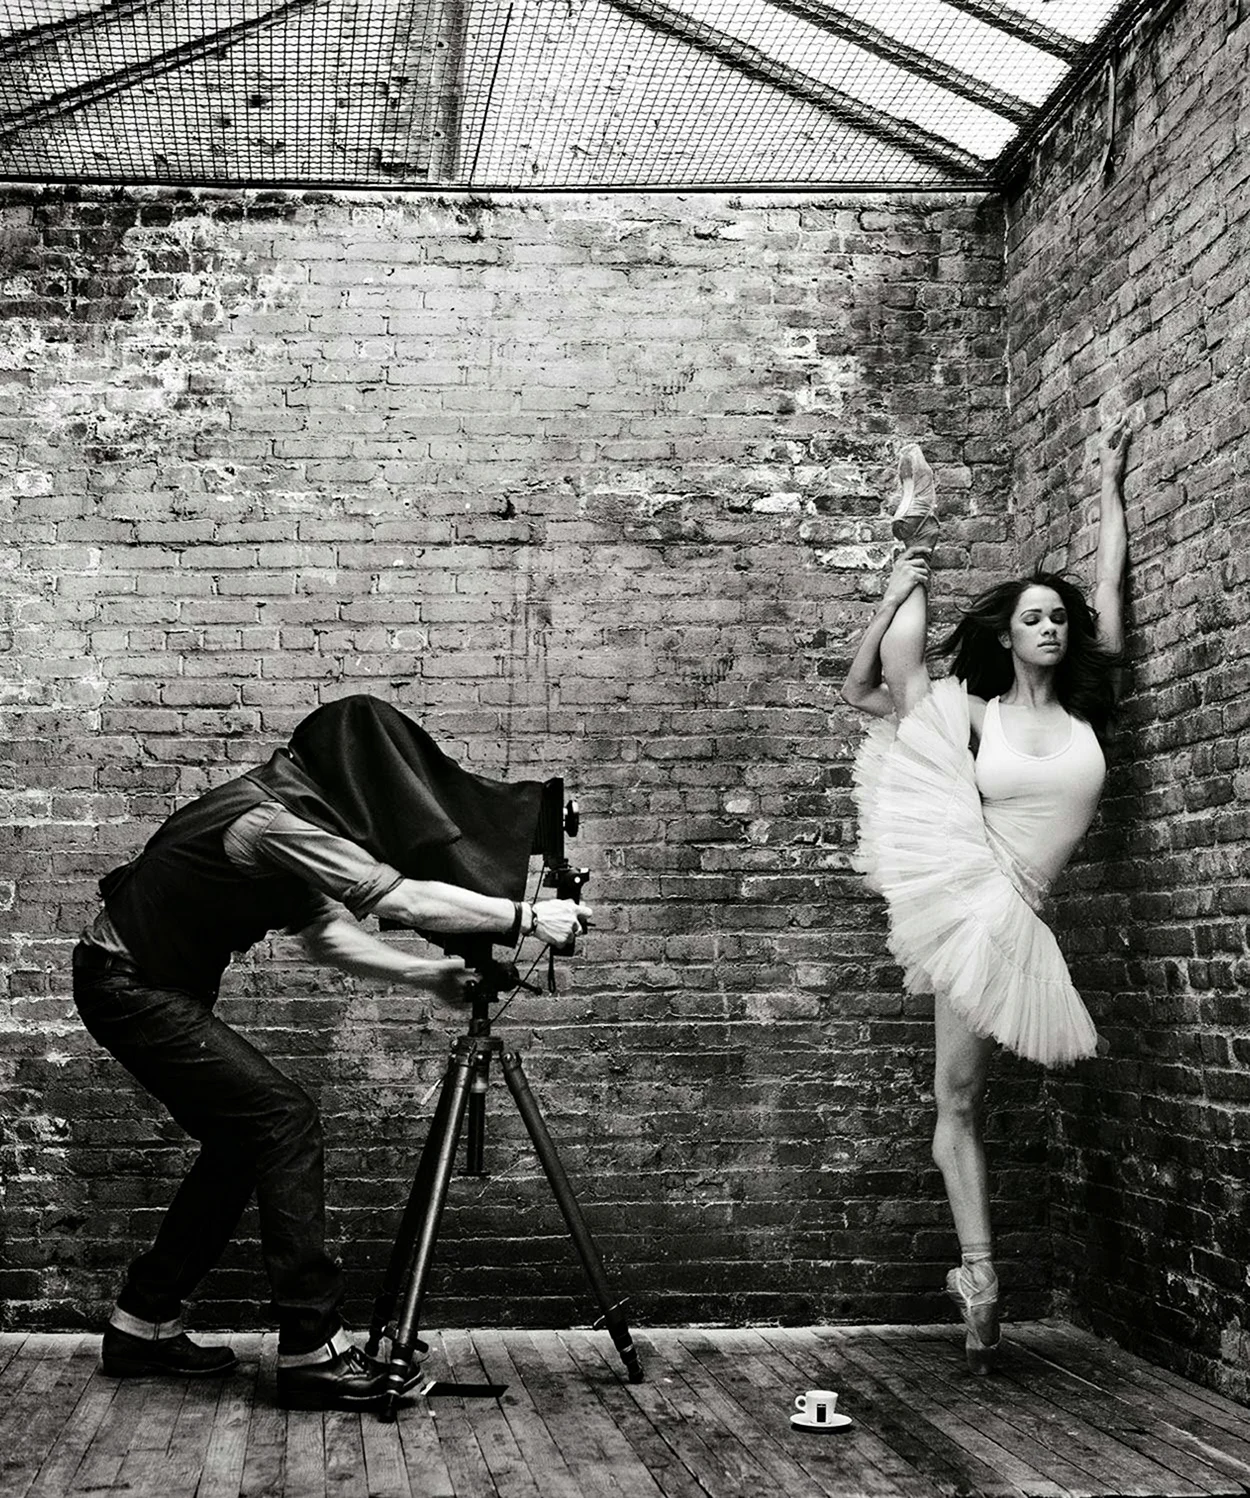 Марк Селигер балерина и фотограф. Красивая картинка